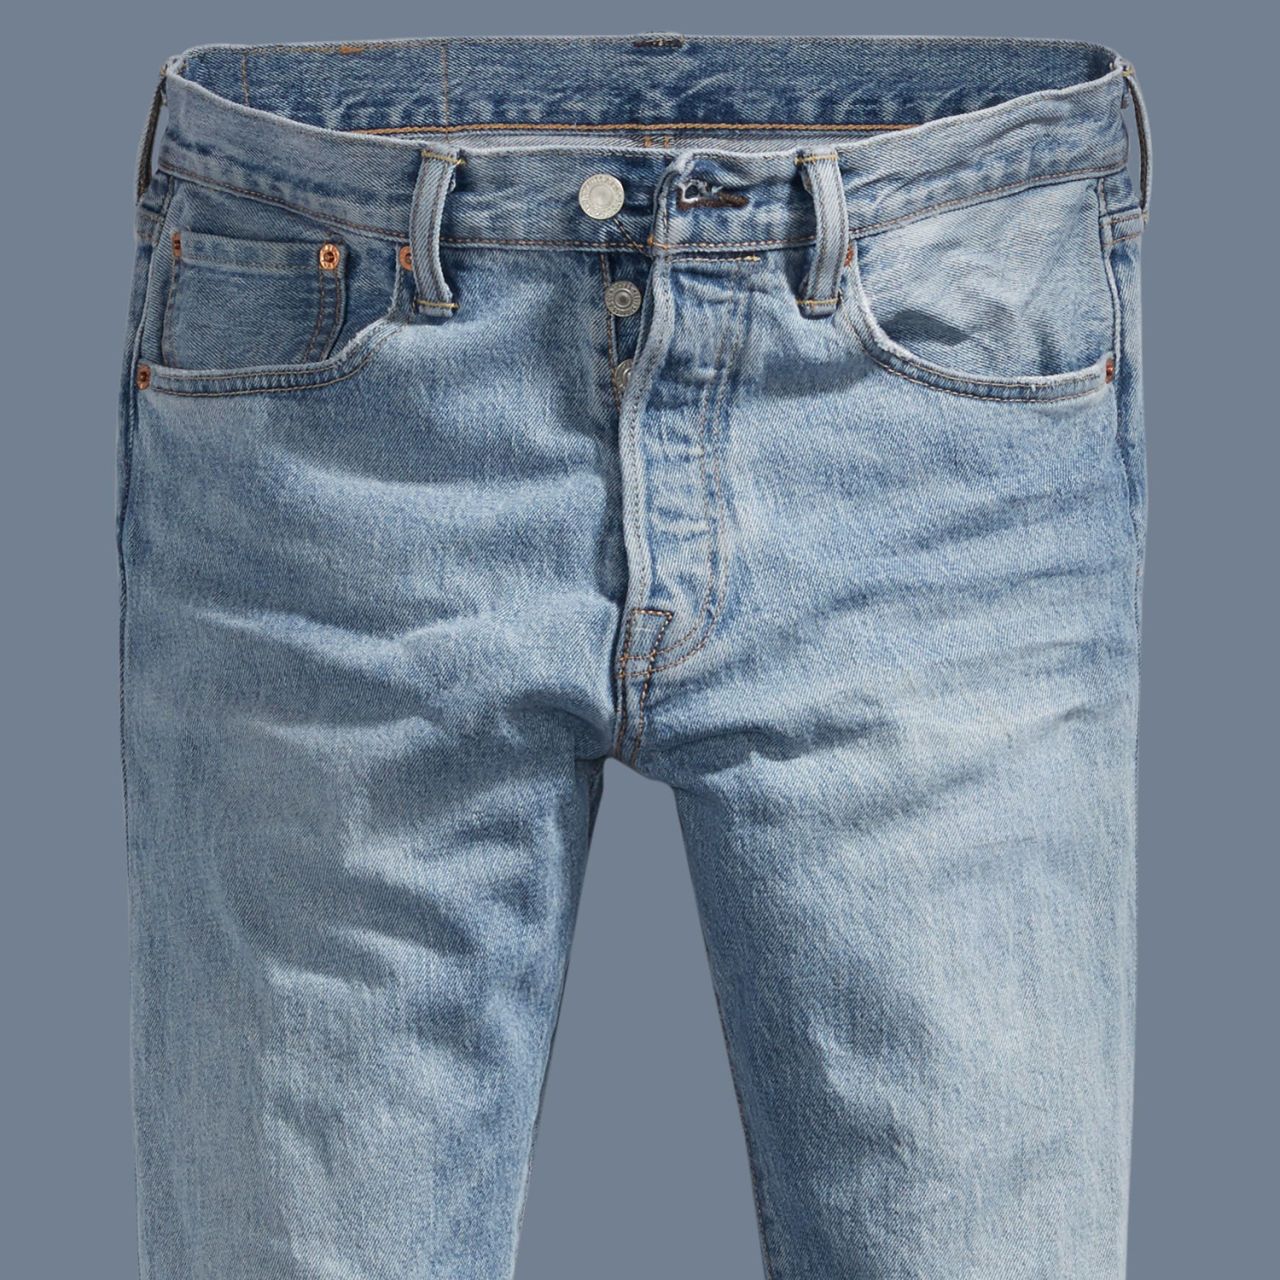 Levis Australia Jeans For Men  Find Your Perfect Fit